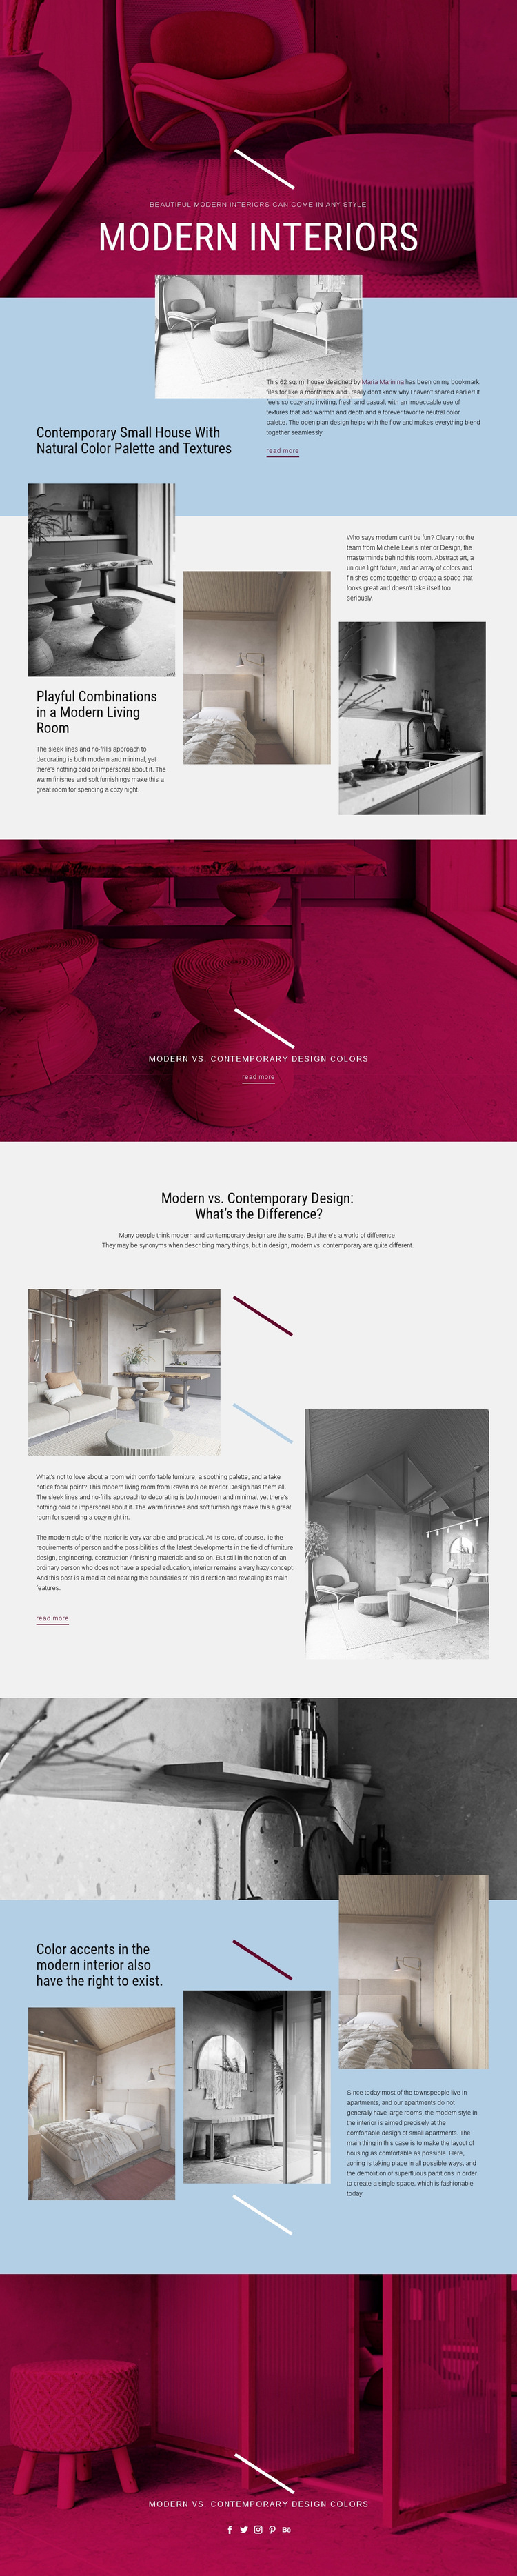 Modern Interiors Web Page Design